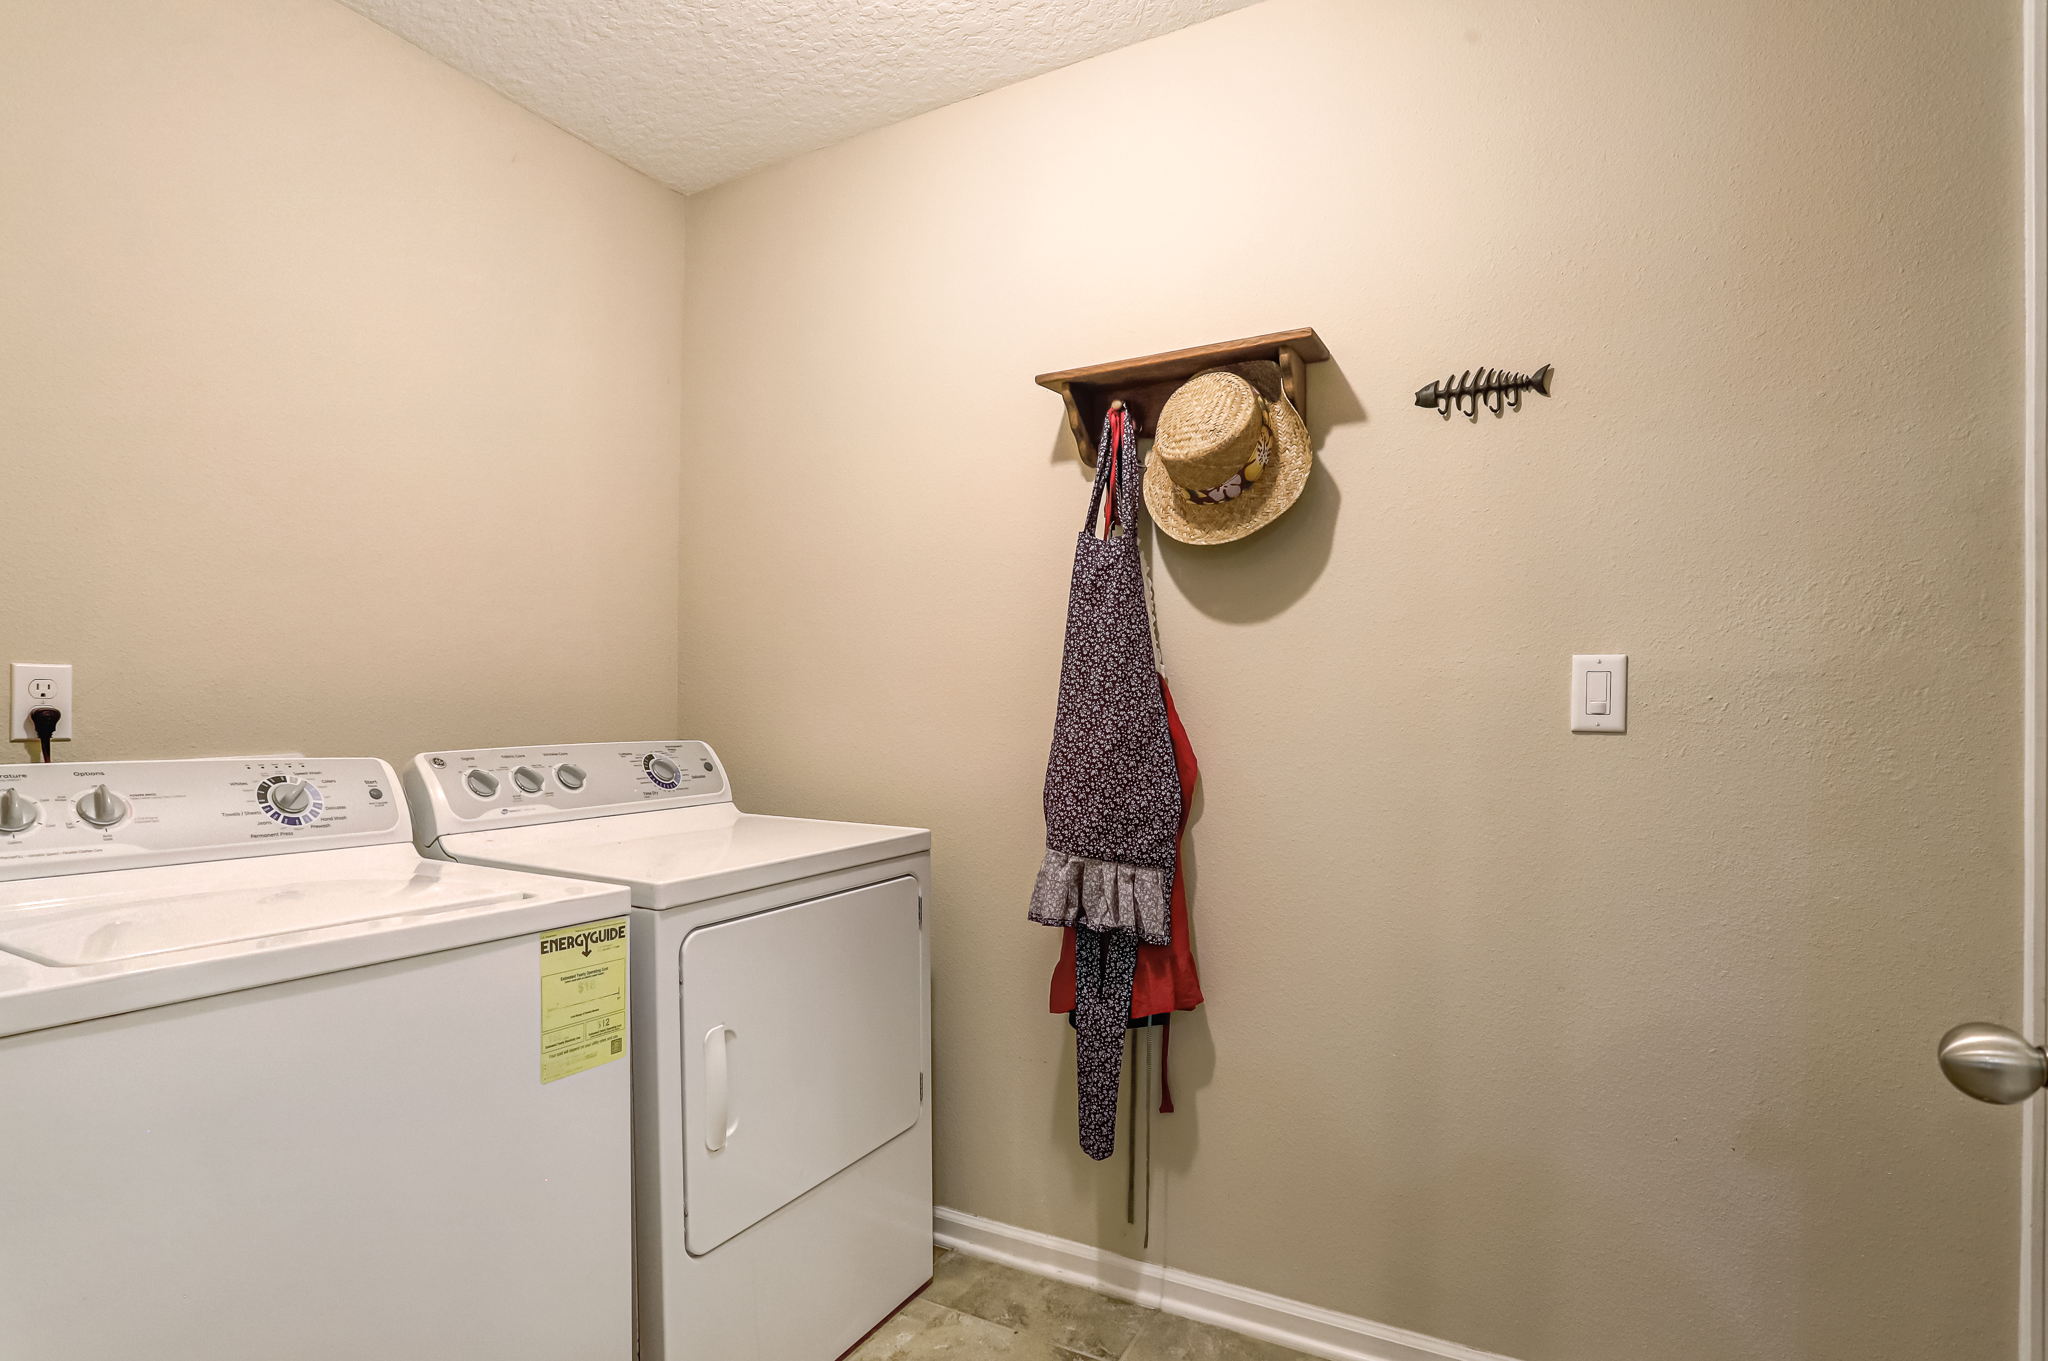 Laundry Room